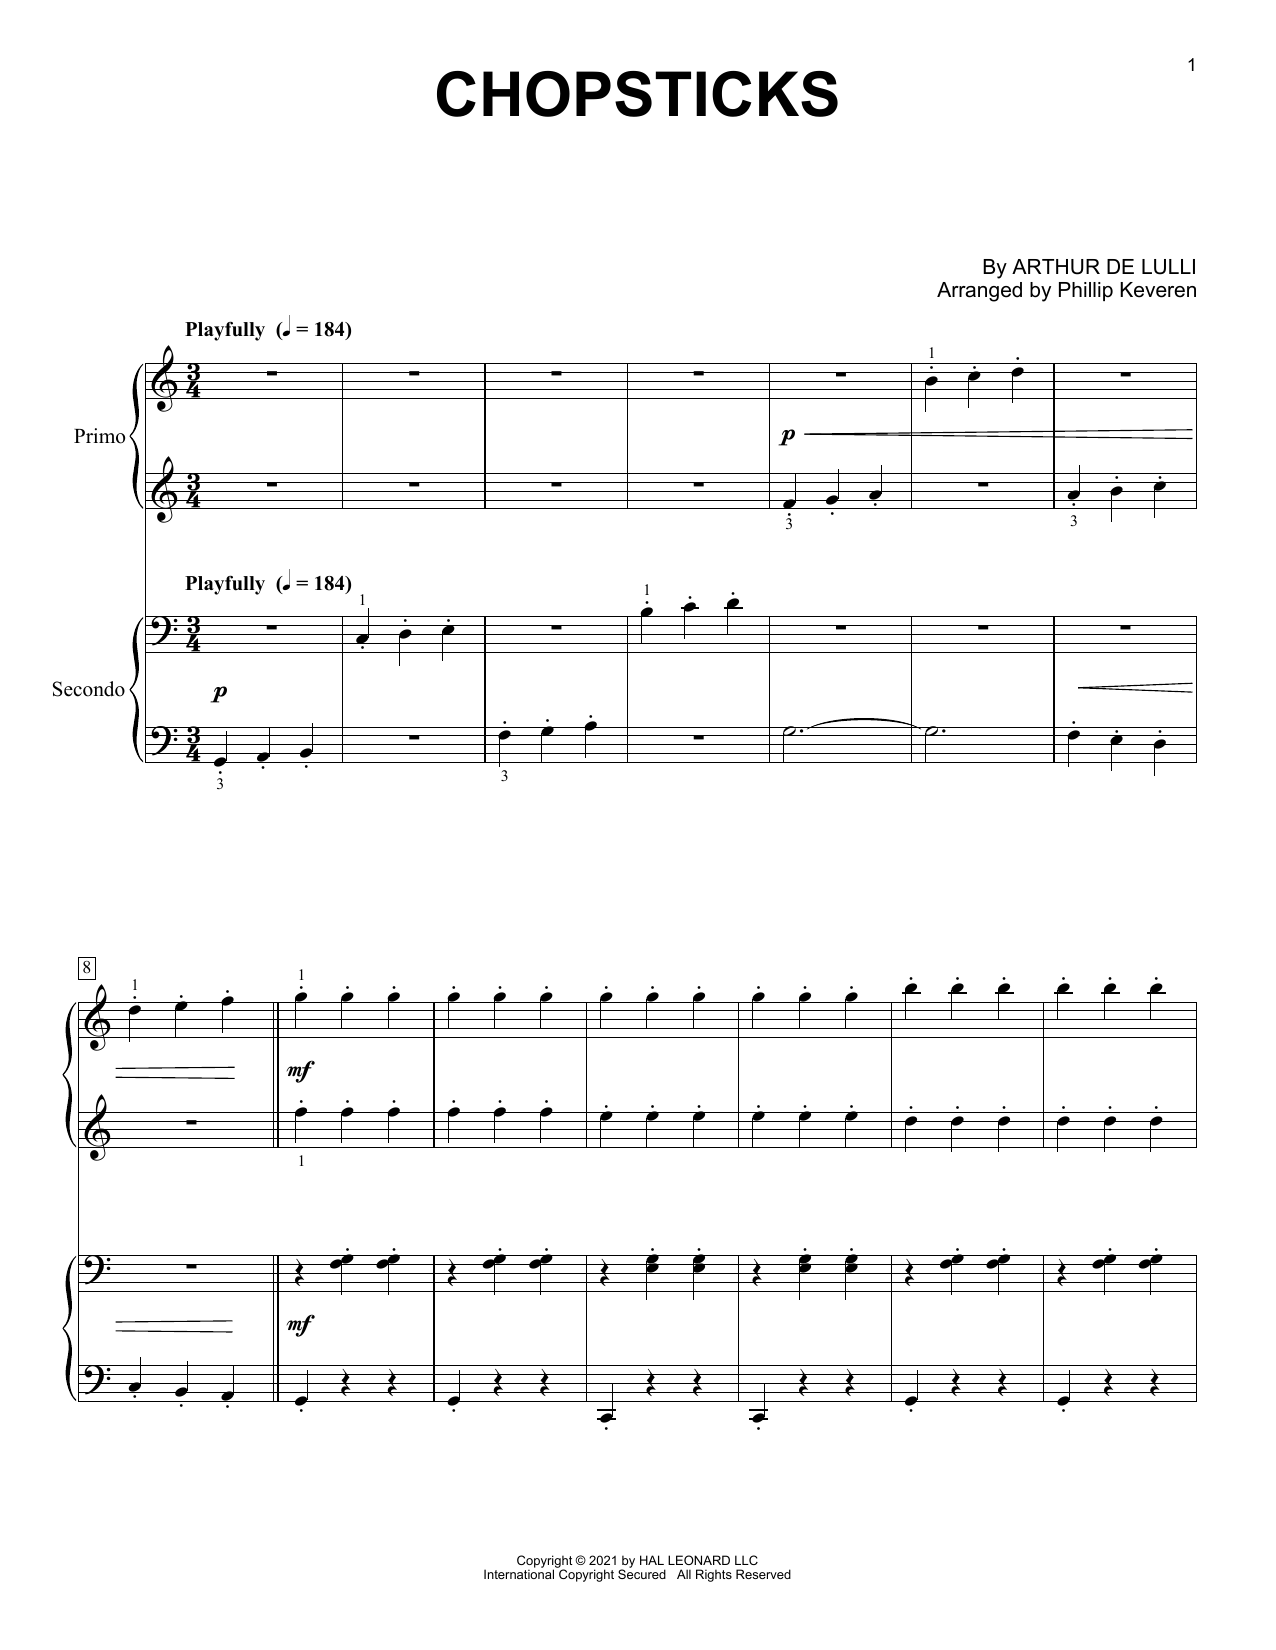 Download Arthur de Lulli Chopsticks (arr. Phillip Keveren) Sheet Music and learn how to play Piano Duet PDF digital score in minutes